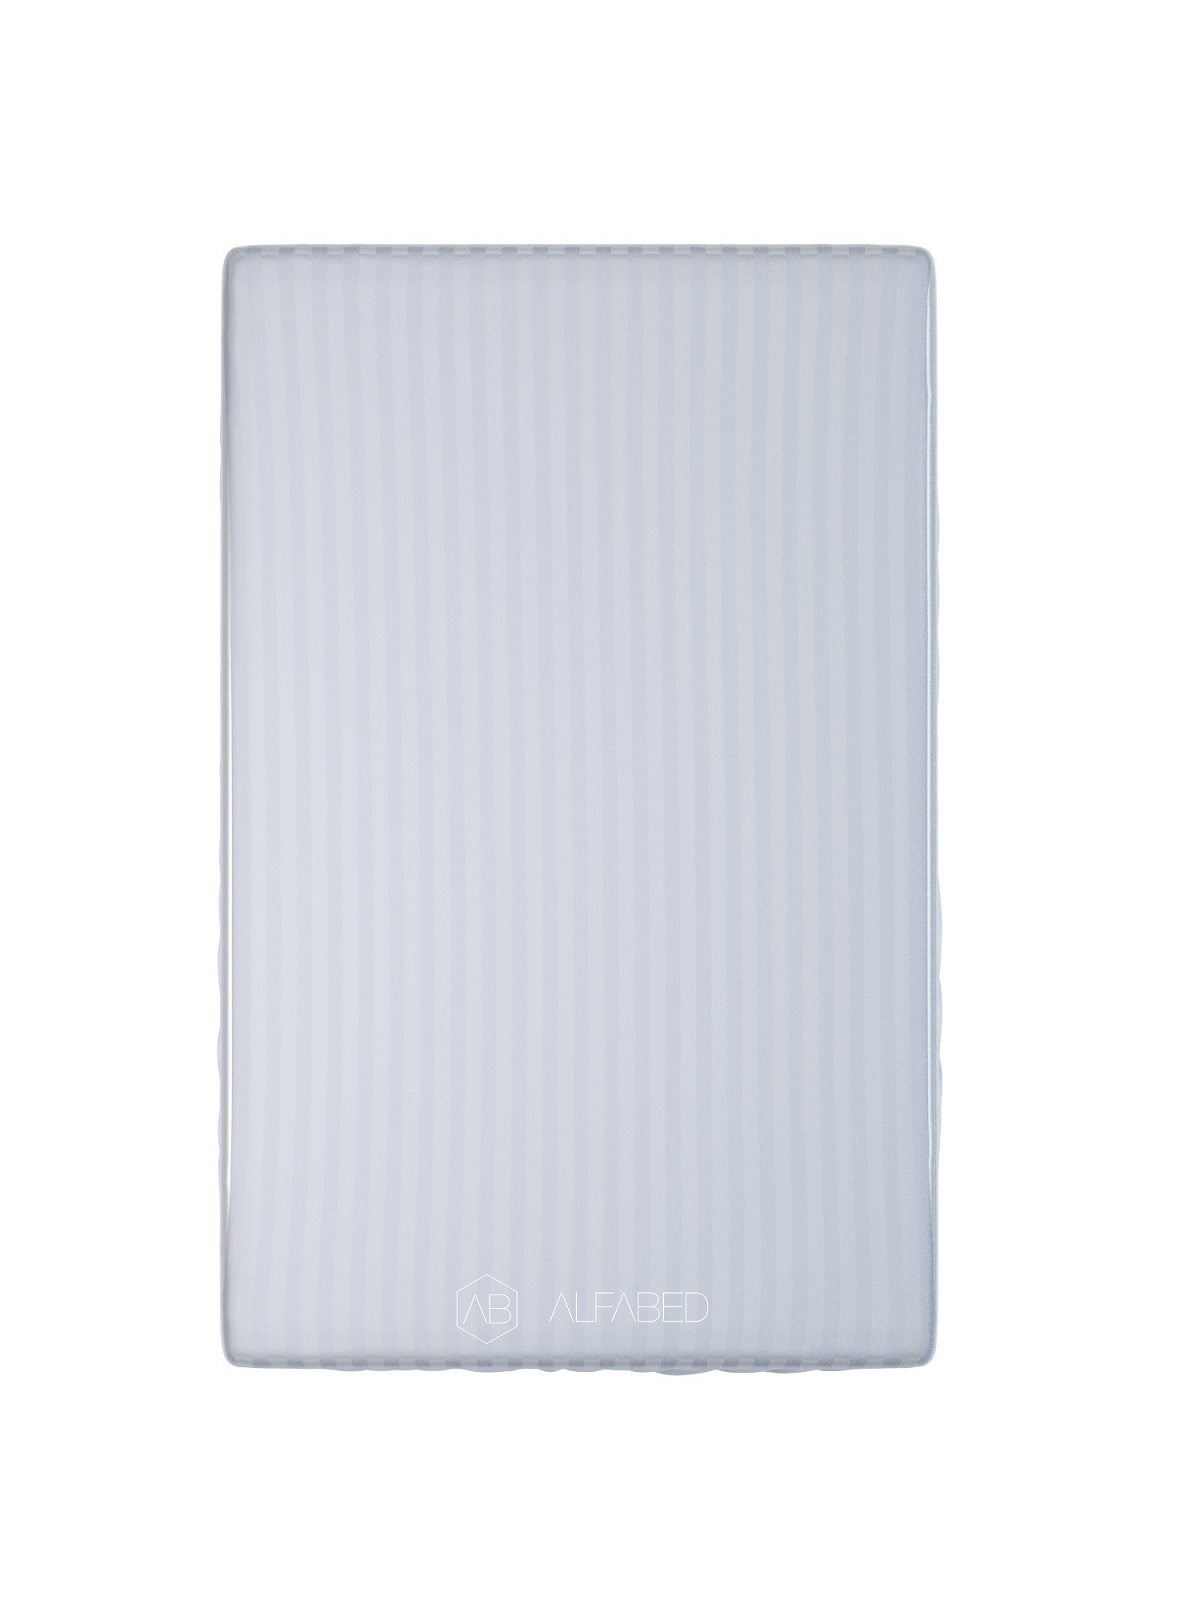 Fitted Sheet Premium Woven Cotton Sateen Stripe White V H-15